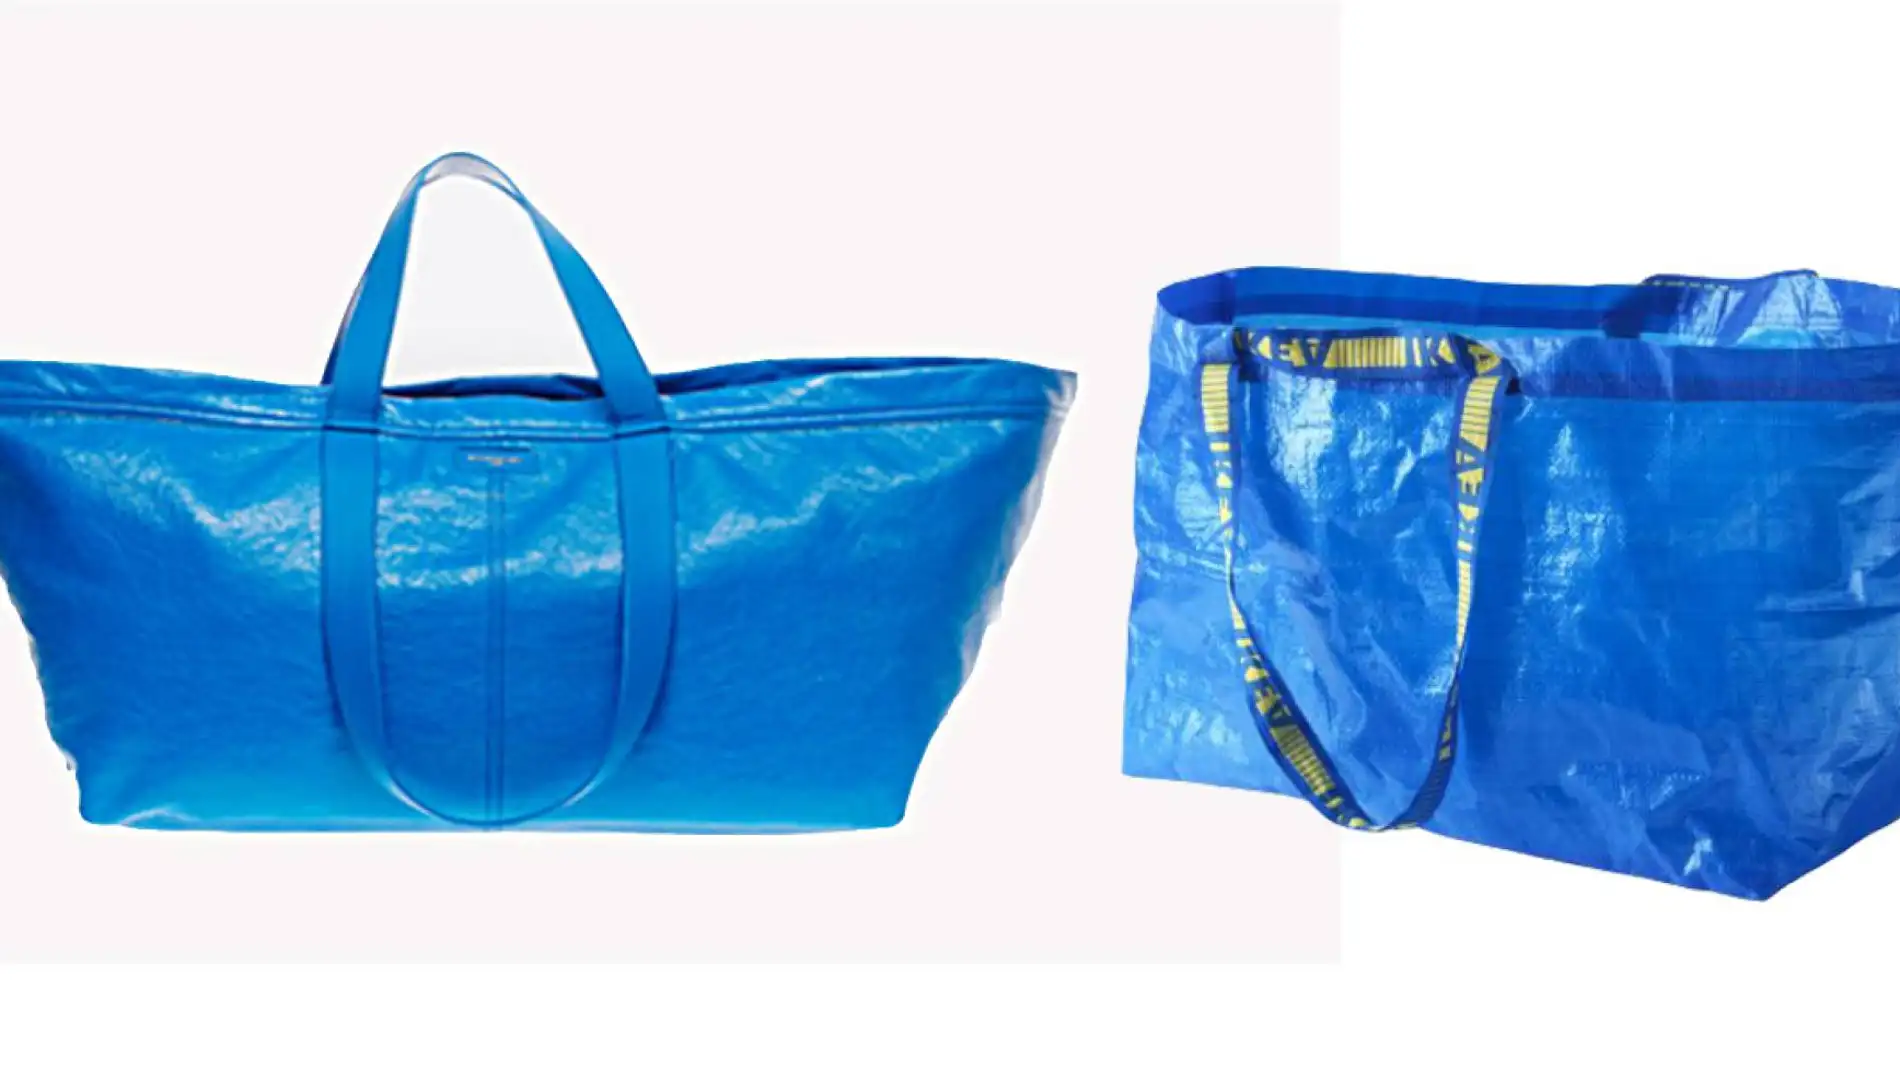 El bolso de Balenciaga vs la bolsa de IKEA